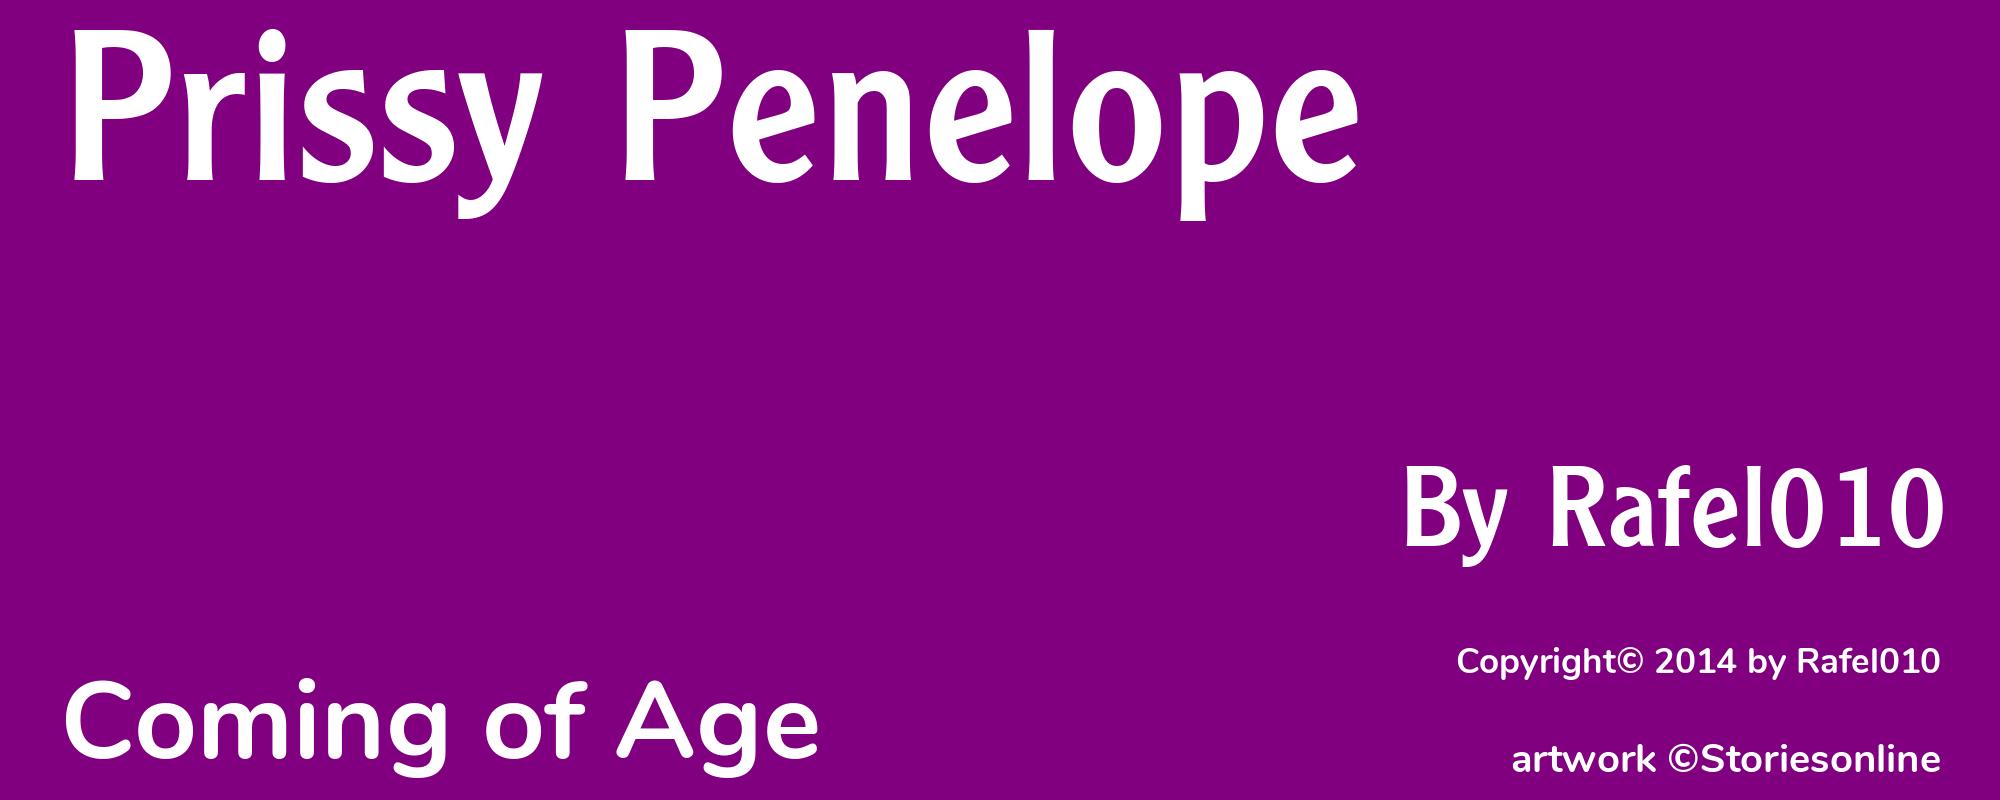 Prissy Penelope - Cover